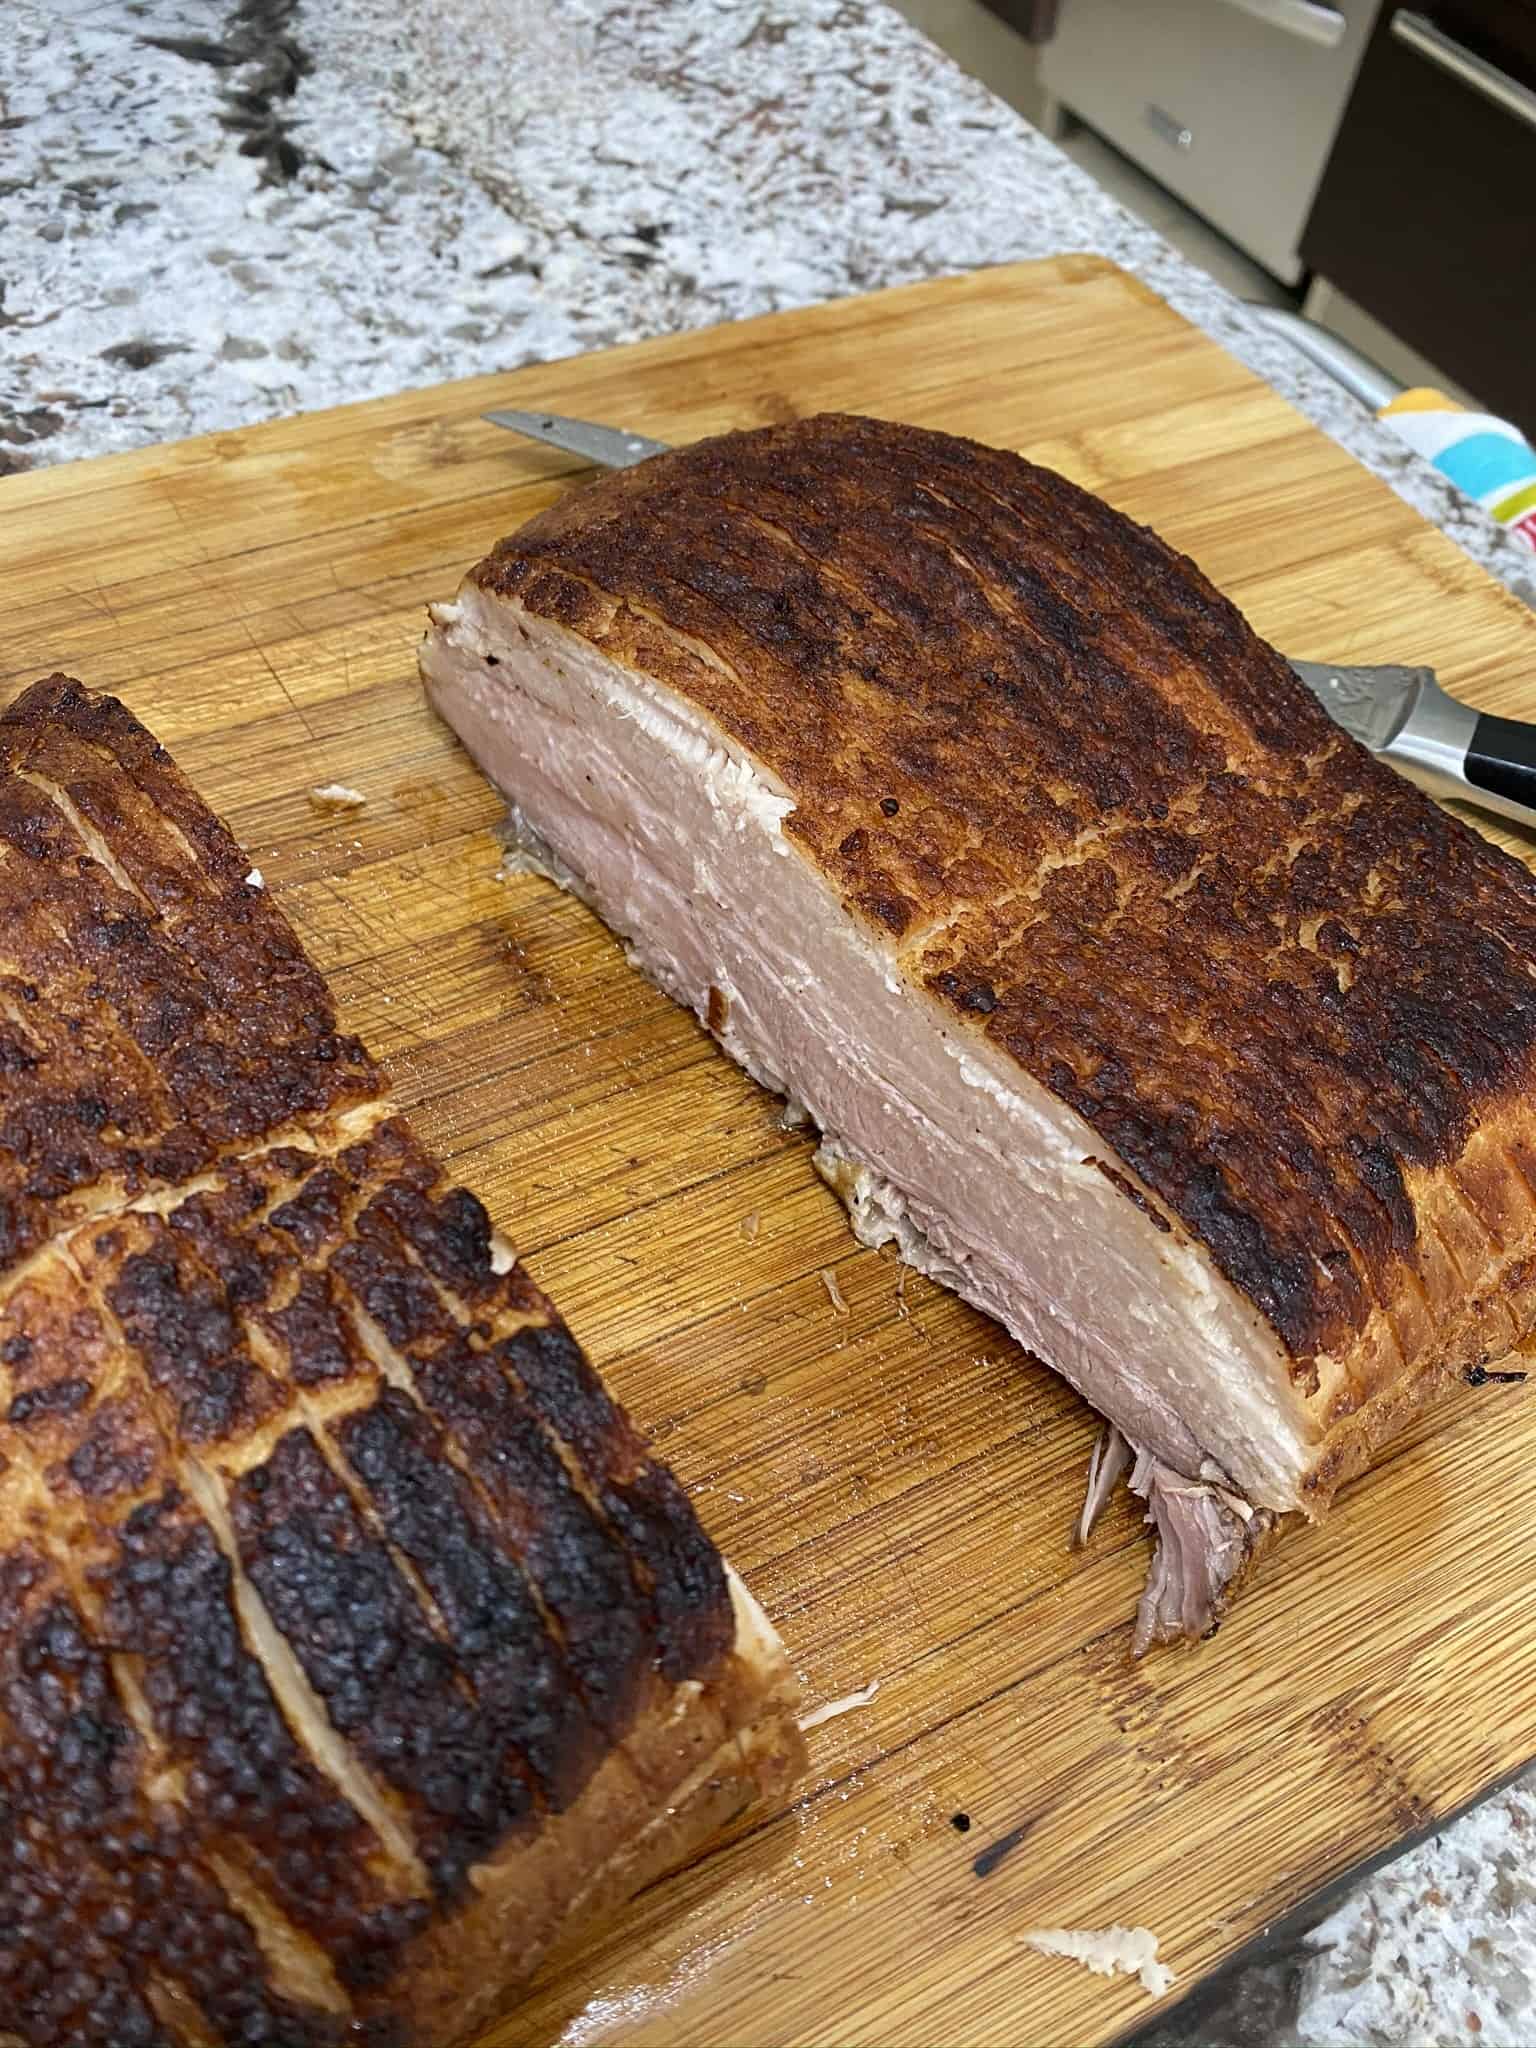 Carving the pork